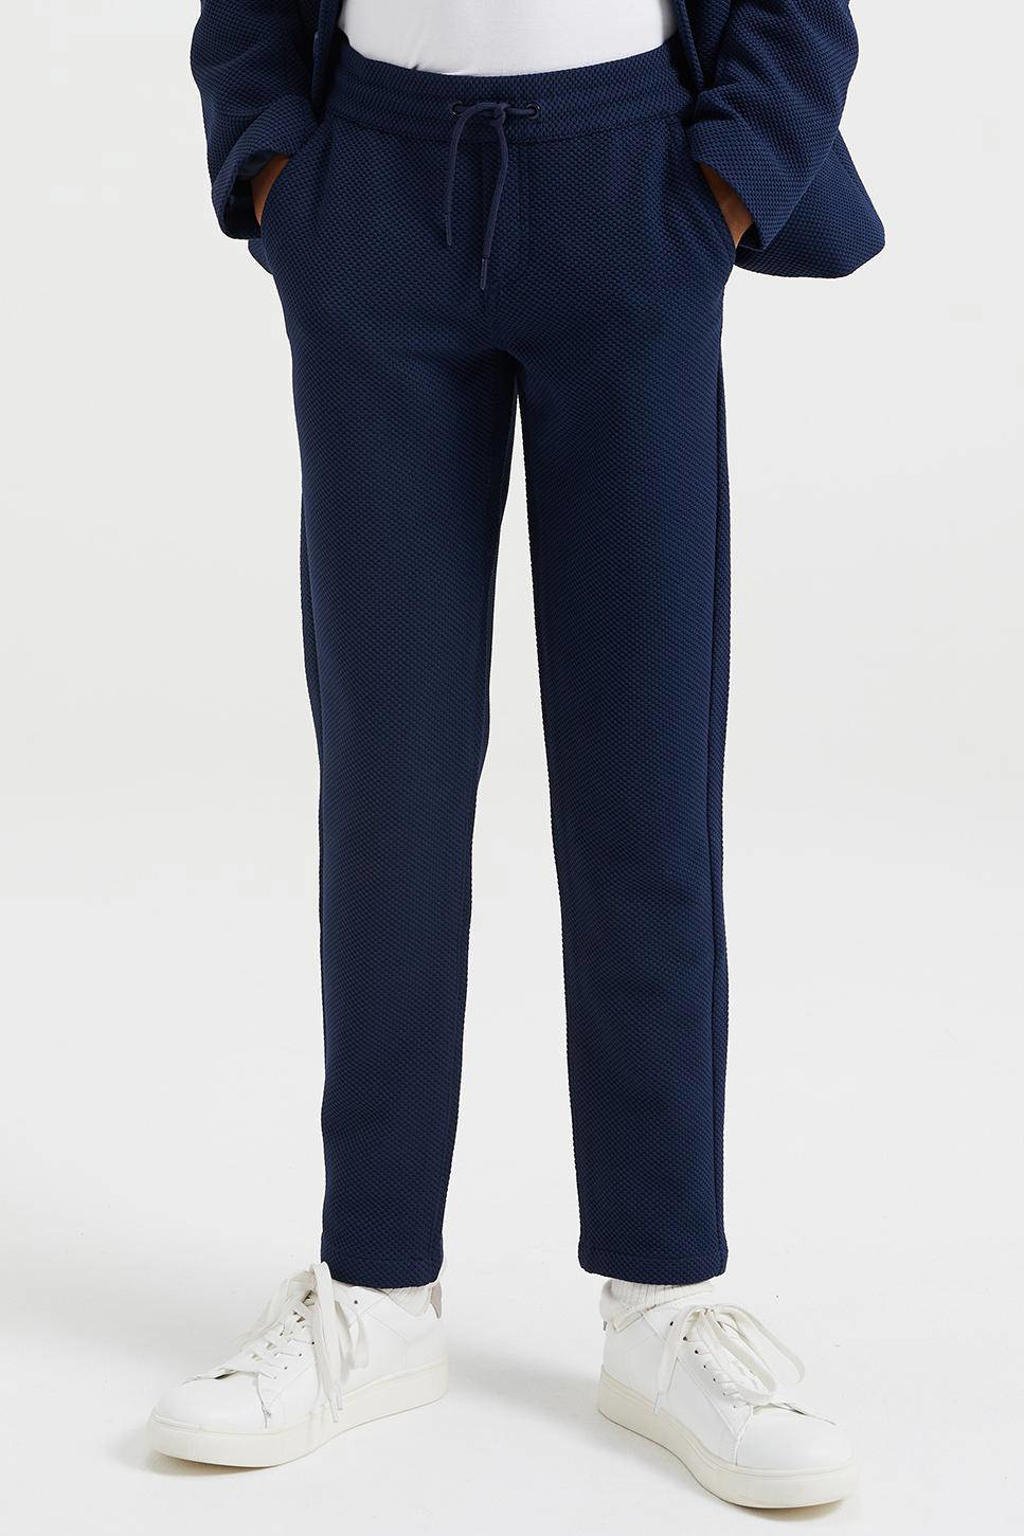 Donkerblauwe jongens WE Fashion slim fit broek van polyester met regular waist en elastische tailleband met koord